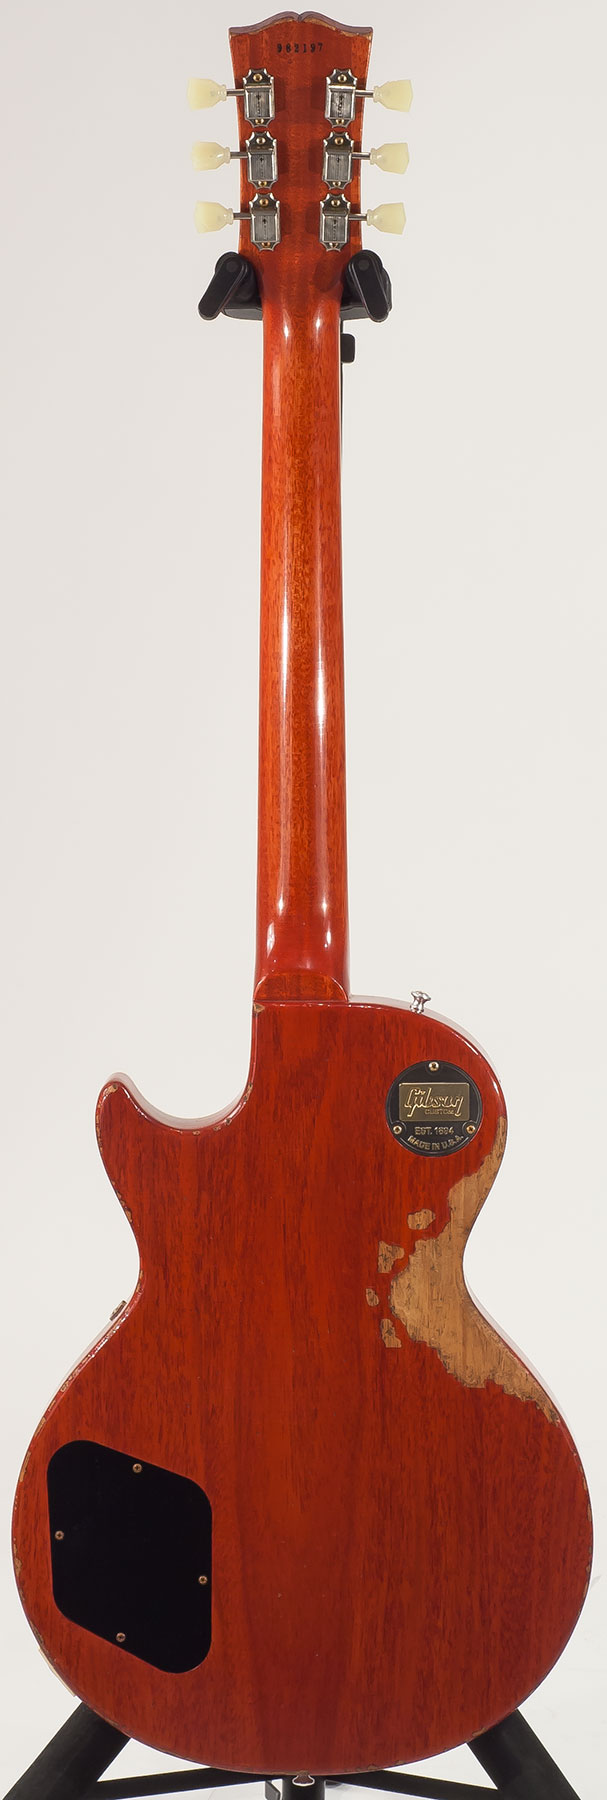 Gibson Custom Shop M2m Les Paul Standard 1959 2h Ht Rw #982197 - Heavy Aged Iced Tea - Single cut electric guitar - Variation 1